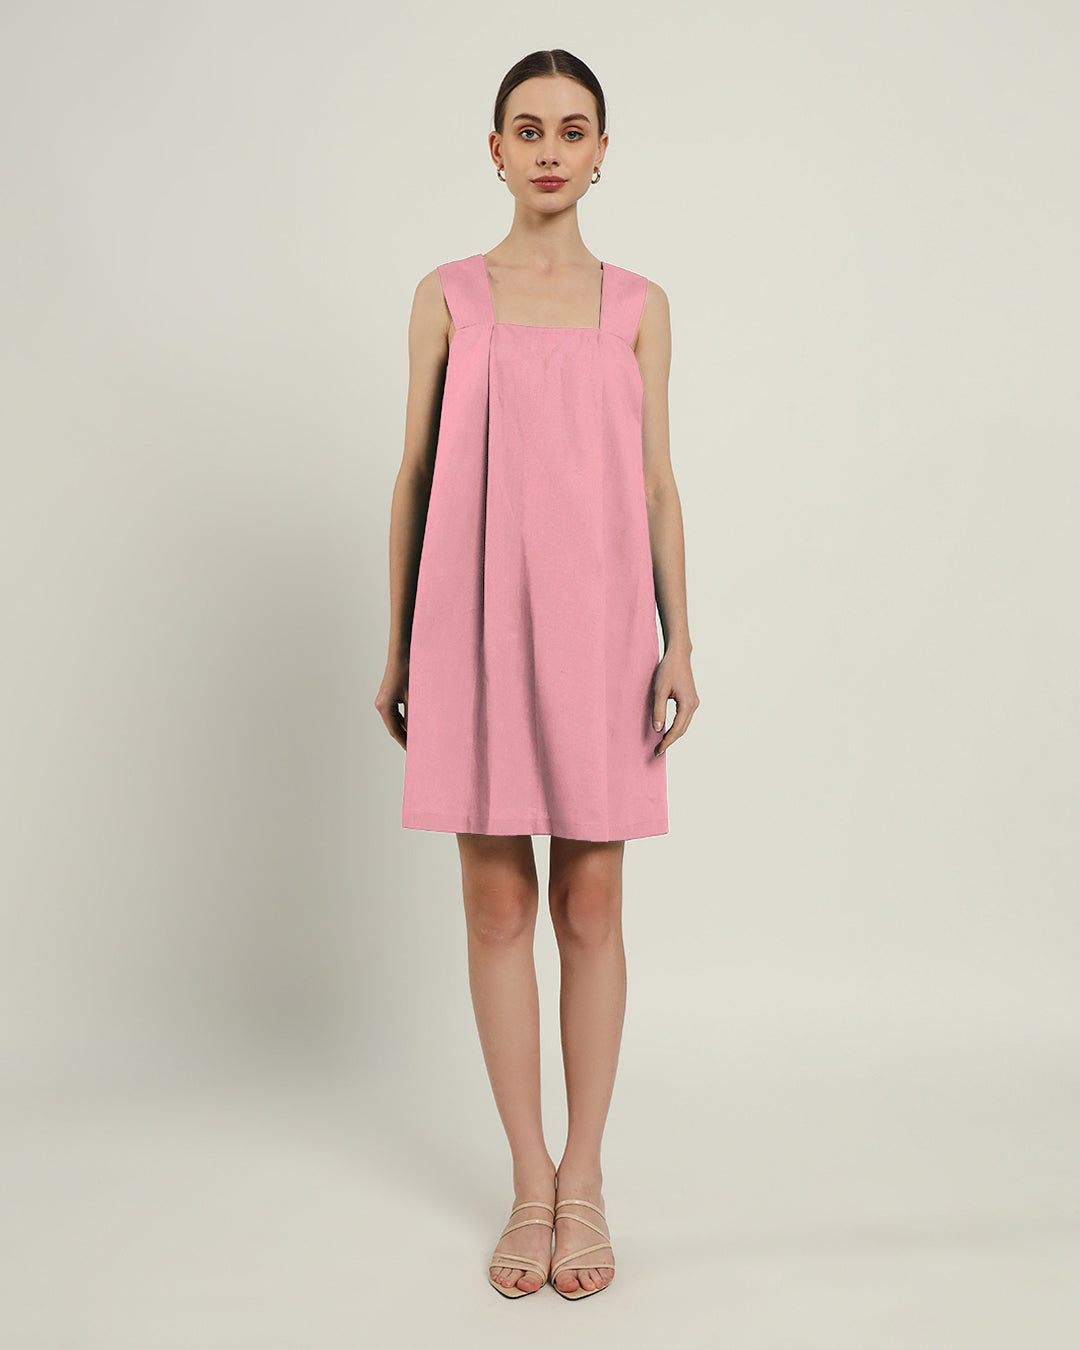 The Larissa Pink Mist Cotton Dress